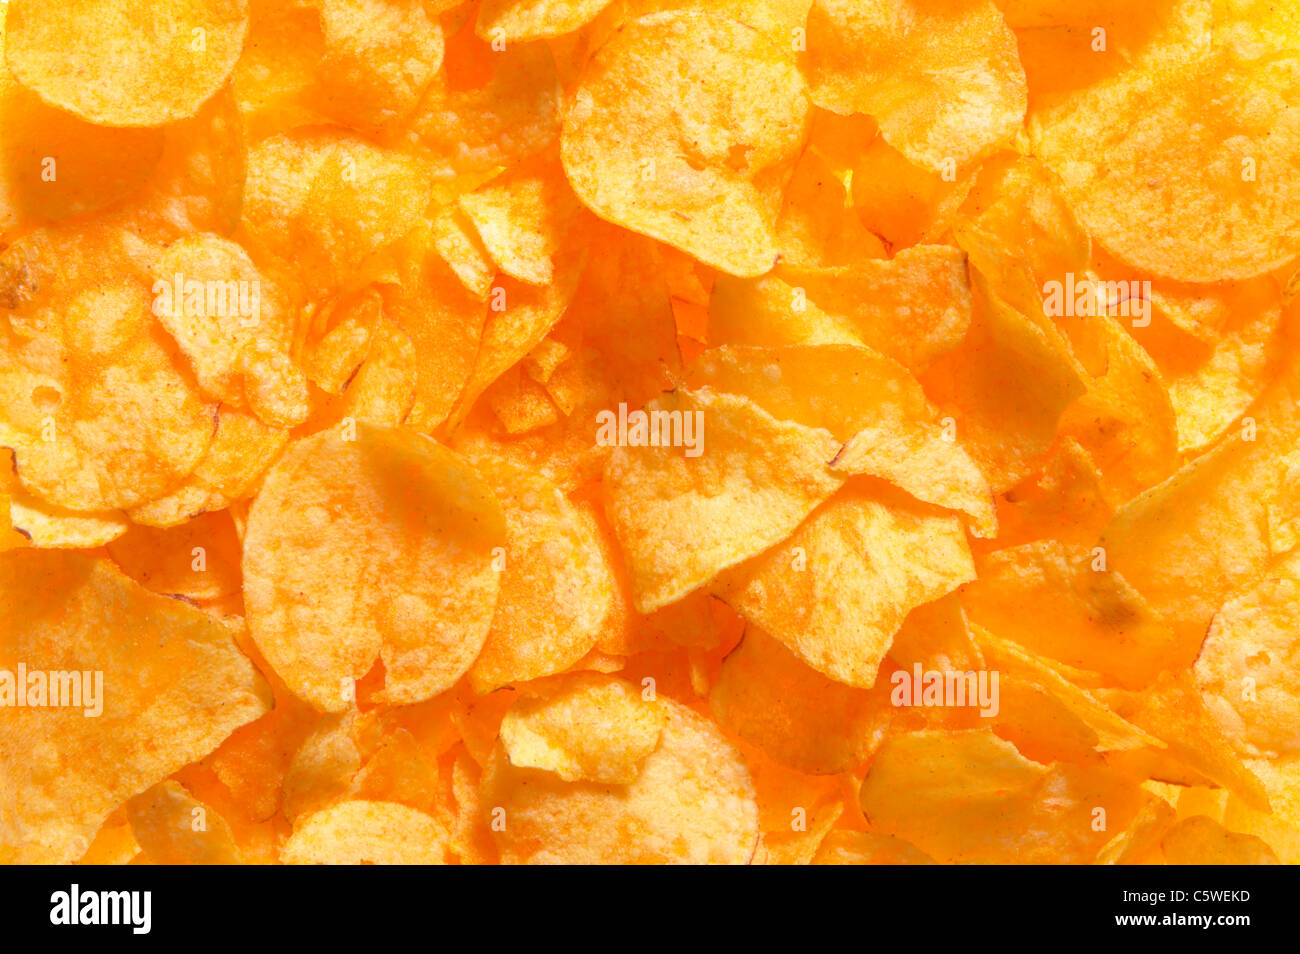 Potato chips, full frame, close-up Stock Photo